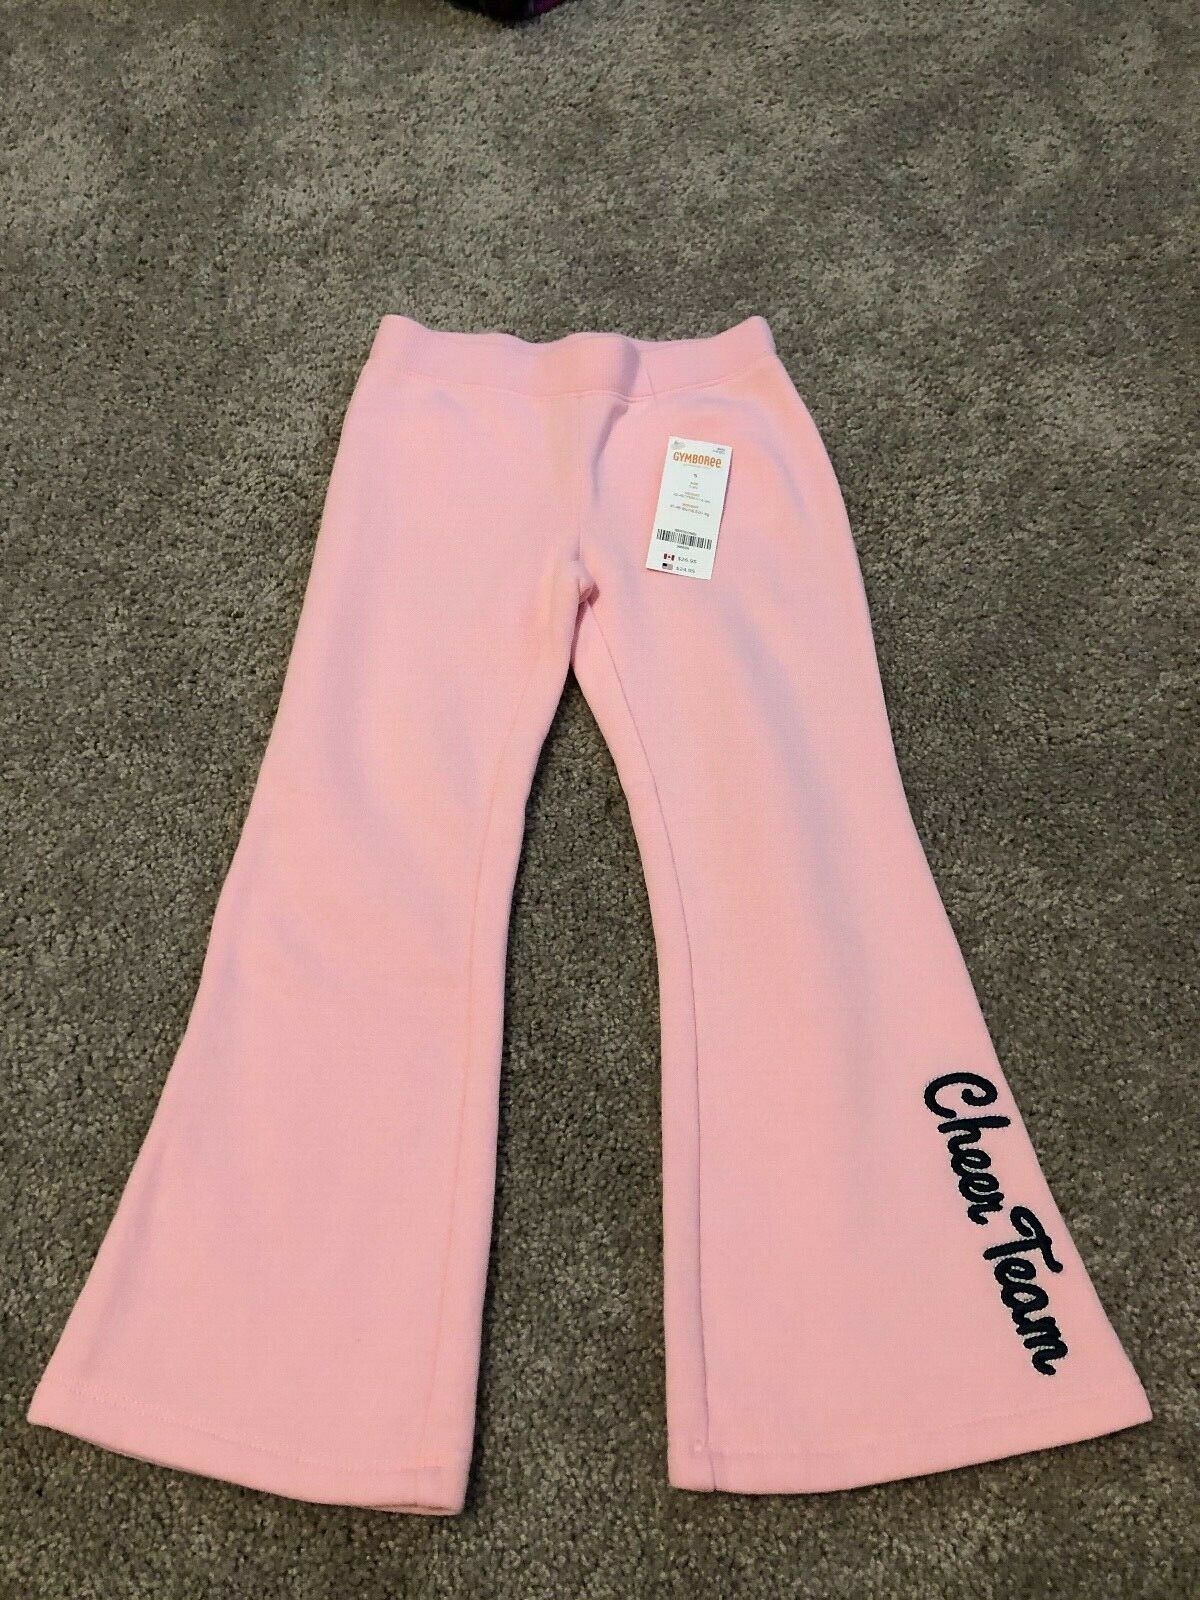 Nwt Gymboree Homecoming Kitty Pink Cheer Sweatpants Girls Size 5